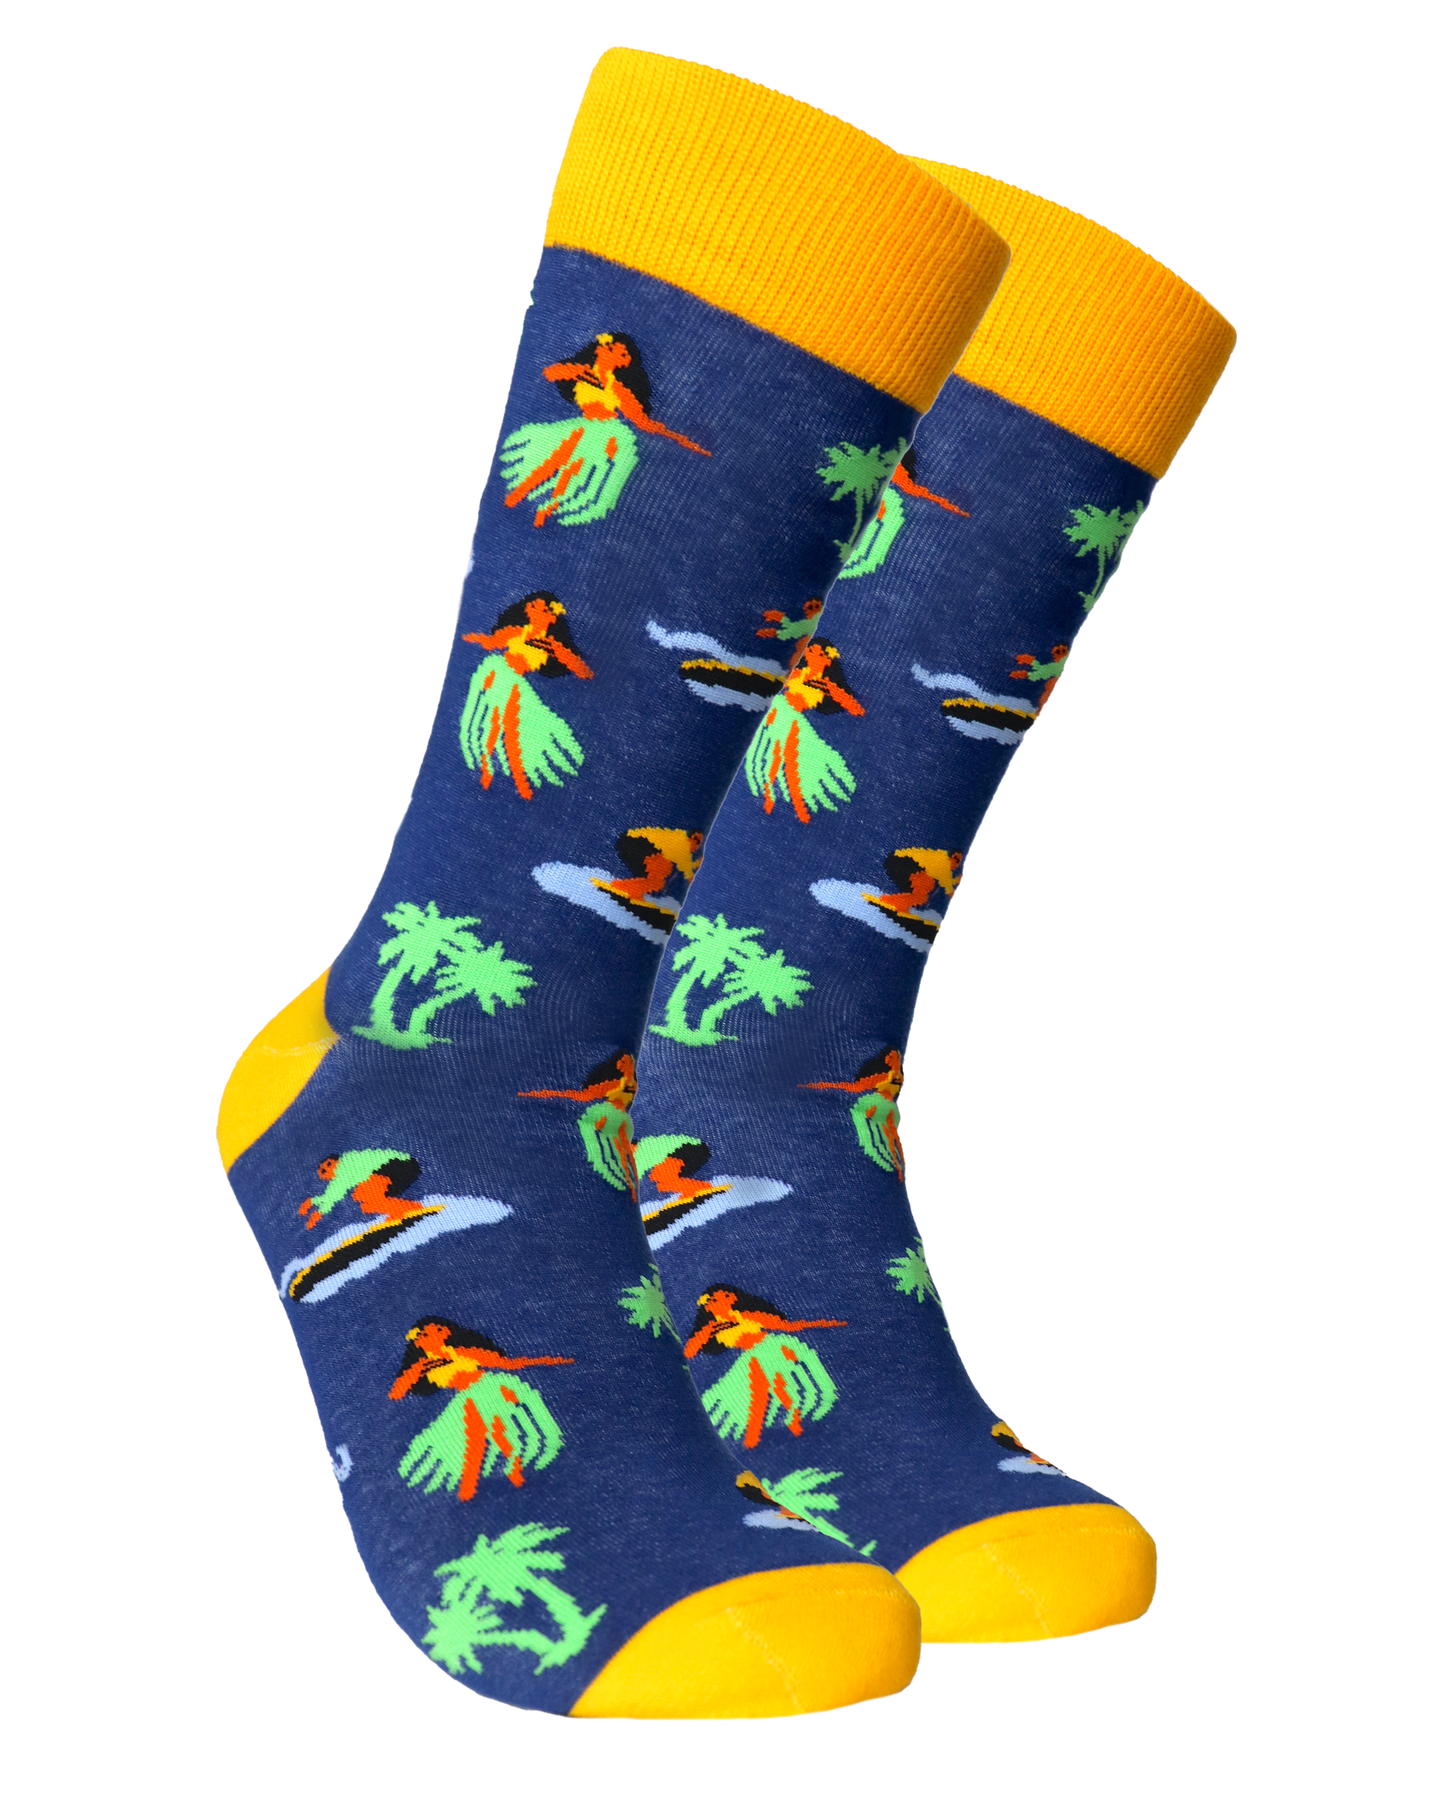 Hawaiian Surf Socks. A pair of socks depicting hula girls and surfers. Blue legs, yellow cuff, heel and toe.